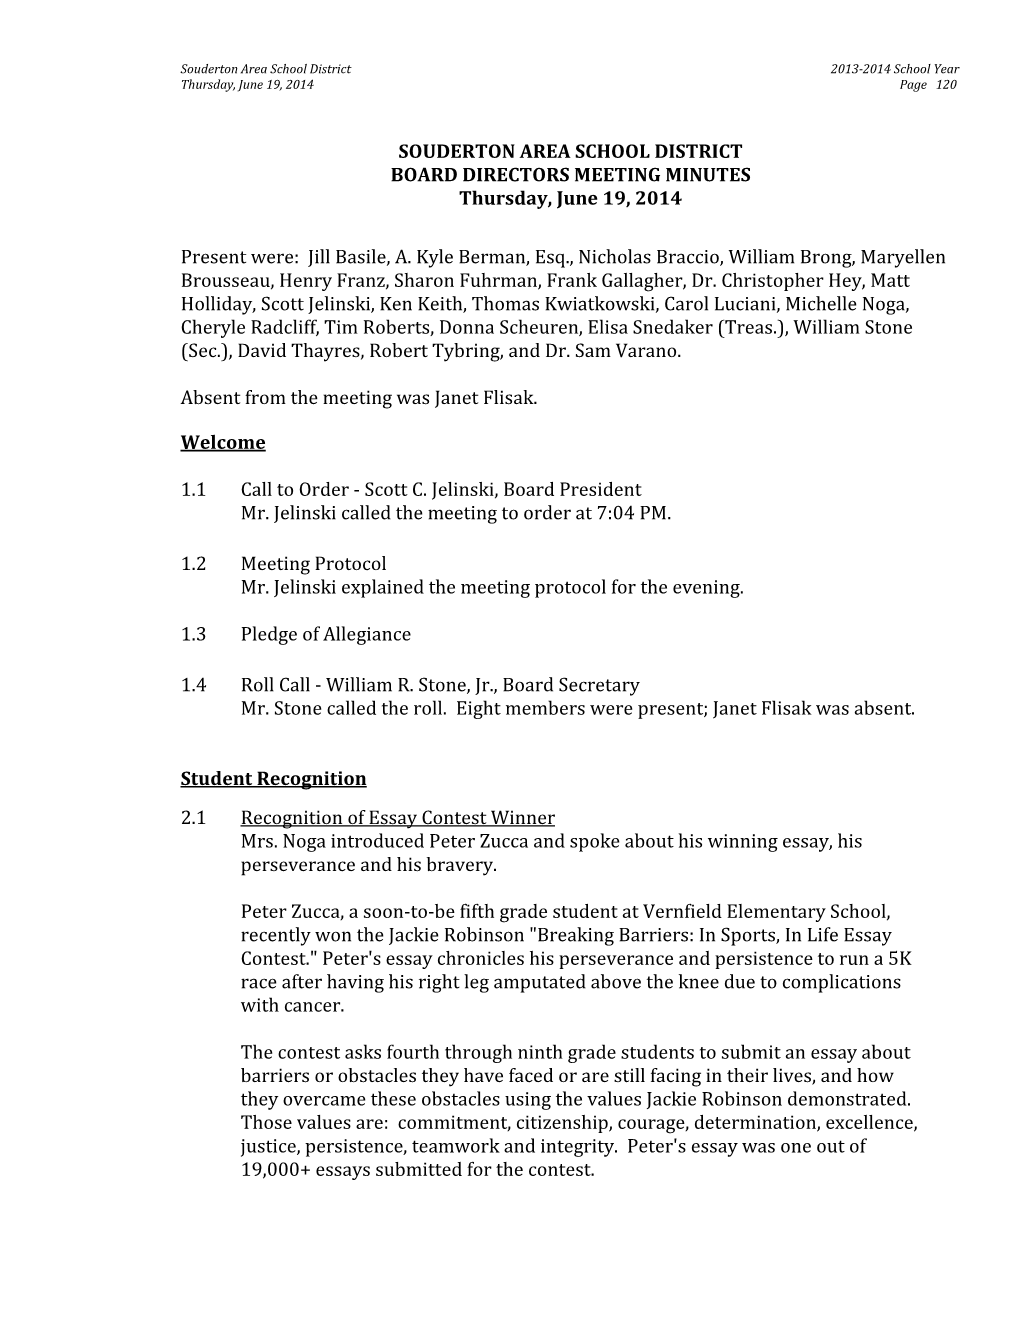 SOUDERTON AREA SCHOOL DISTRICT BOARD DIRECTORS MEETING MINUTES Thursday, June 19, 2014